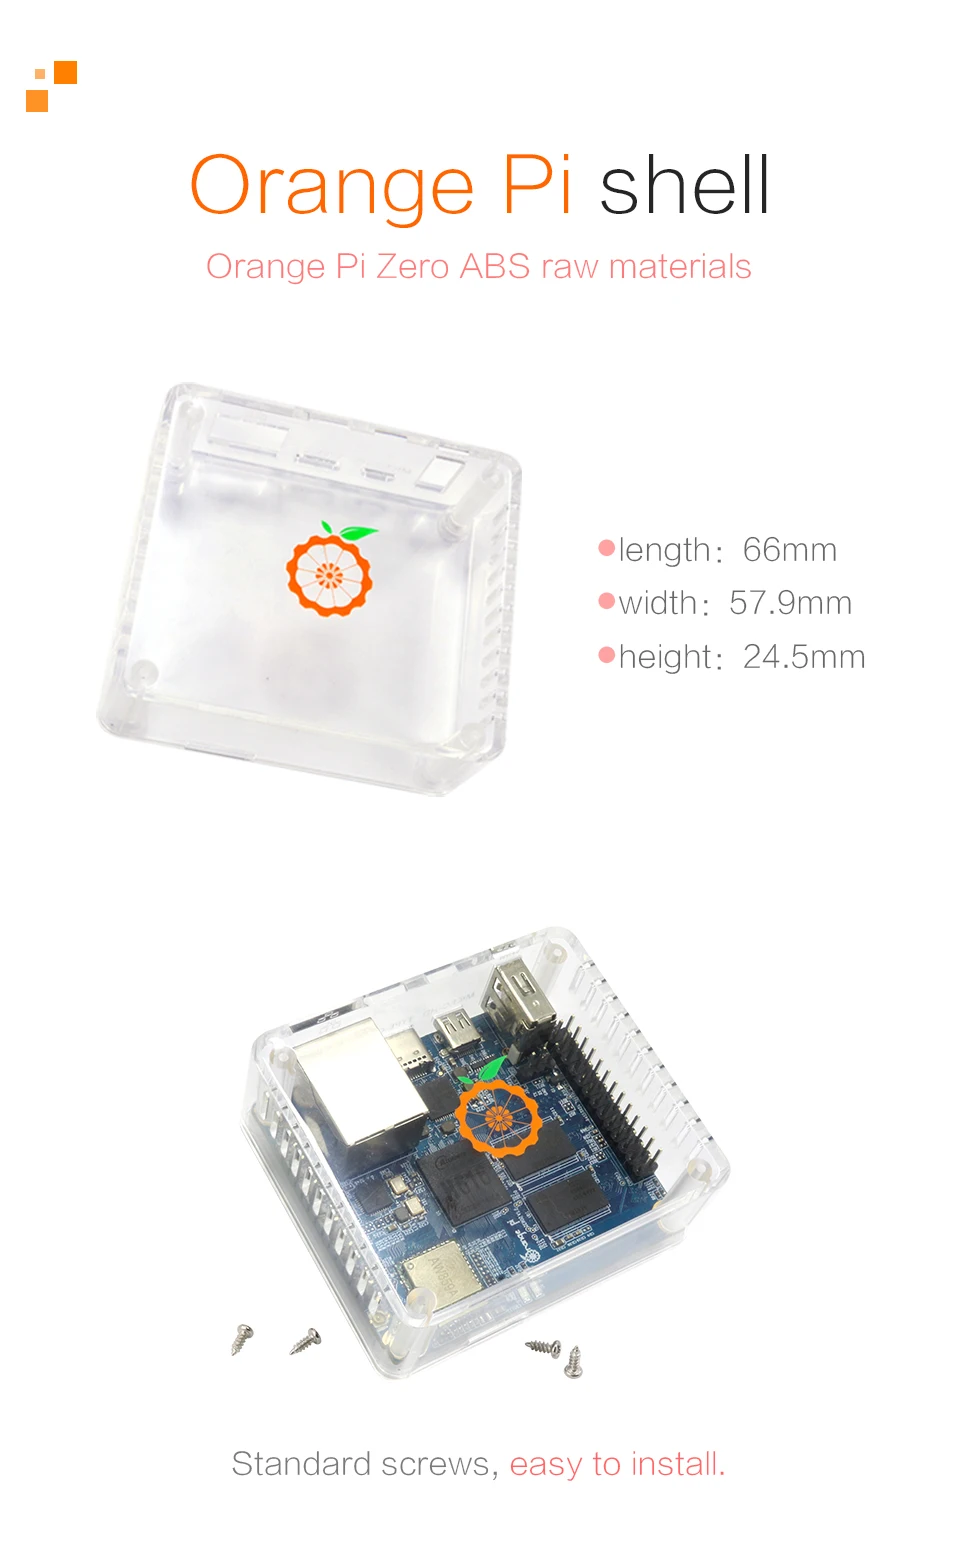 Orange Pi Zero 2 ABS Transparent Case, Transparent Environmentally friendly ABS raw material pi